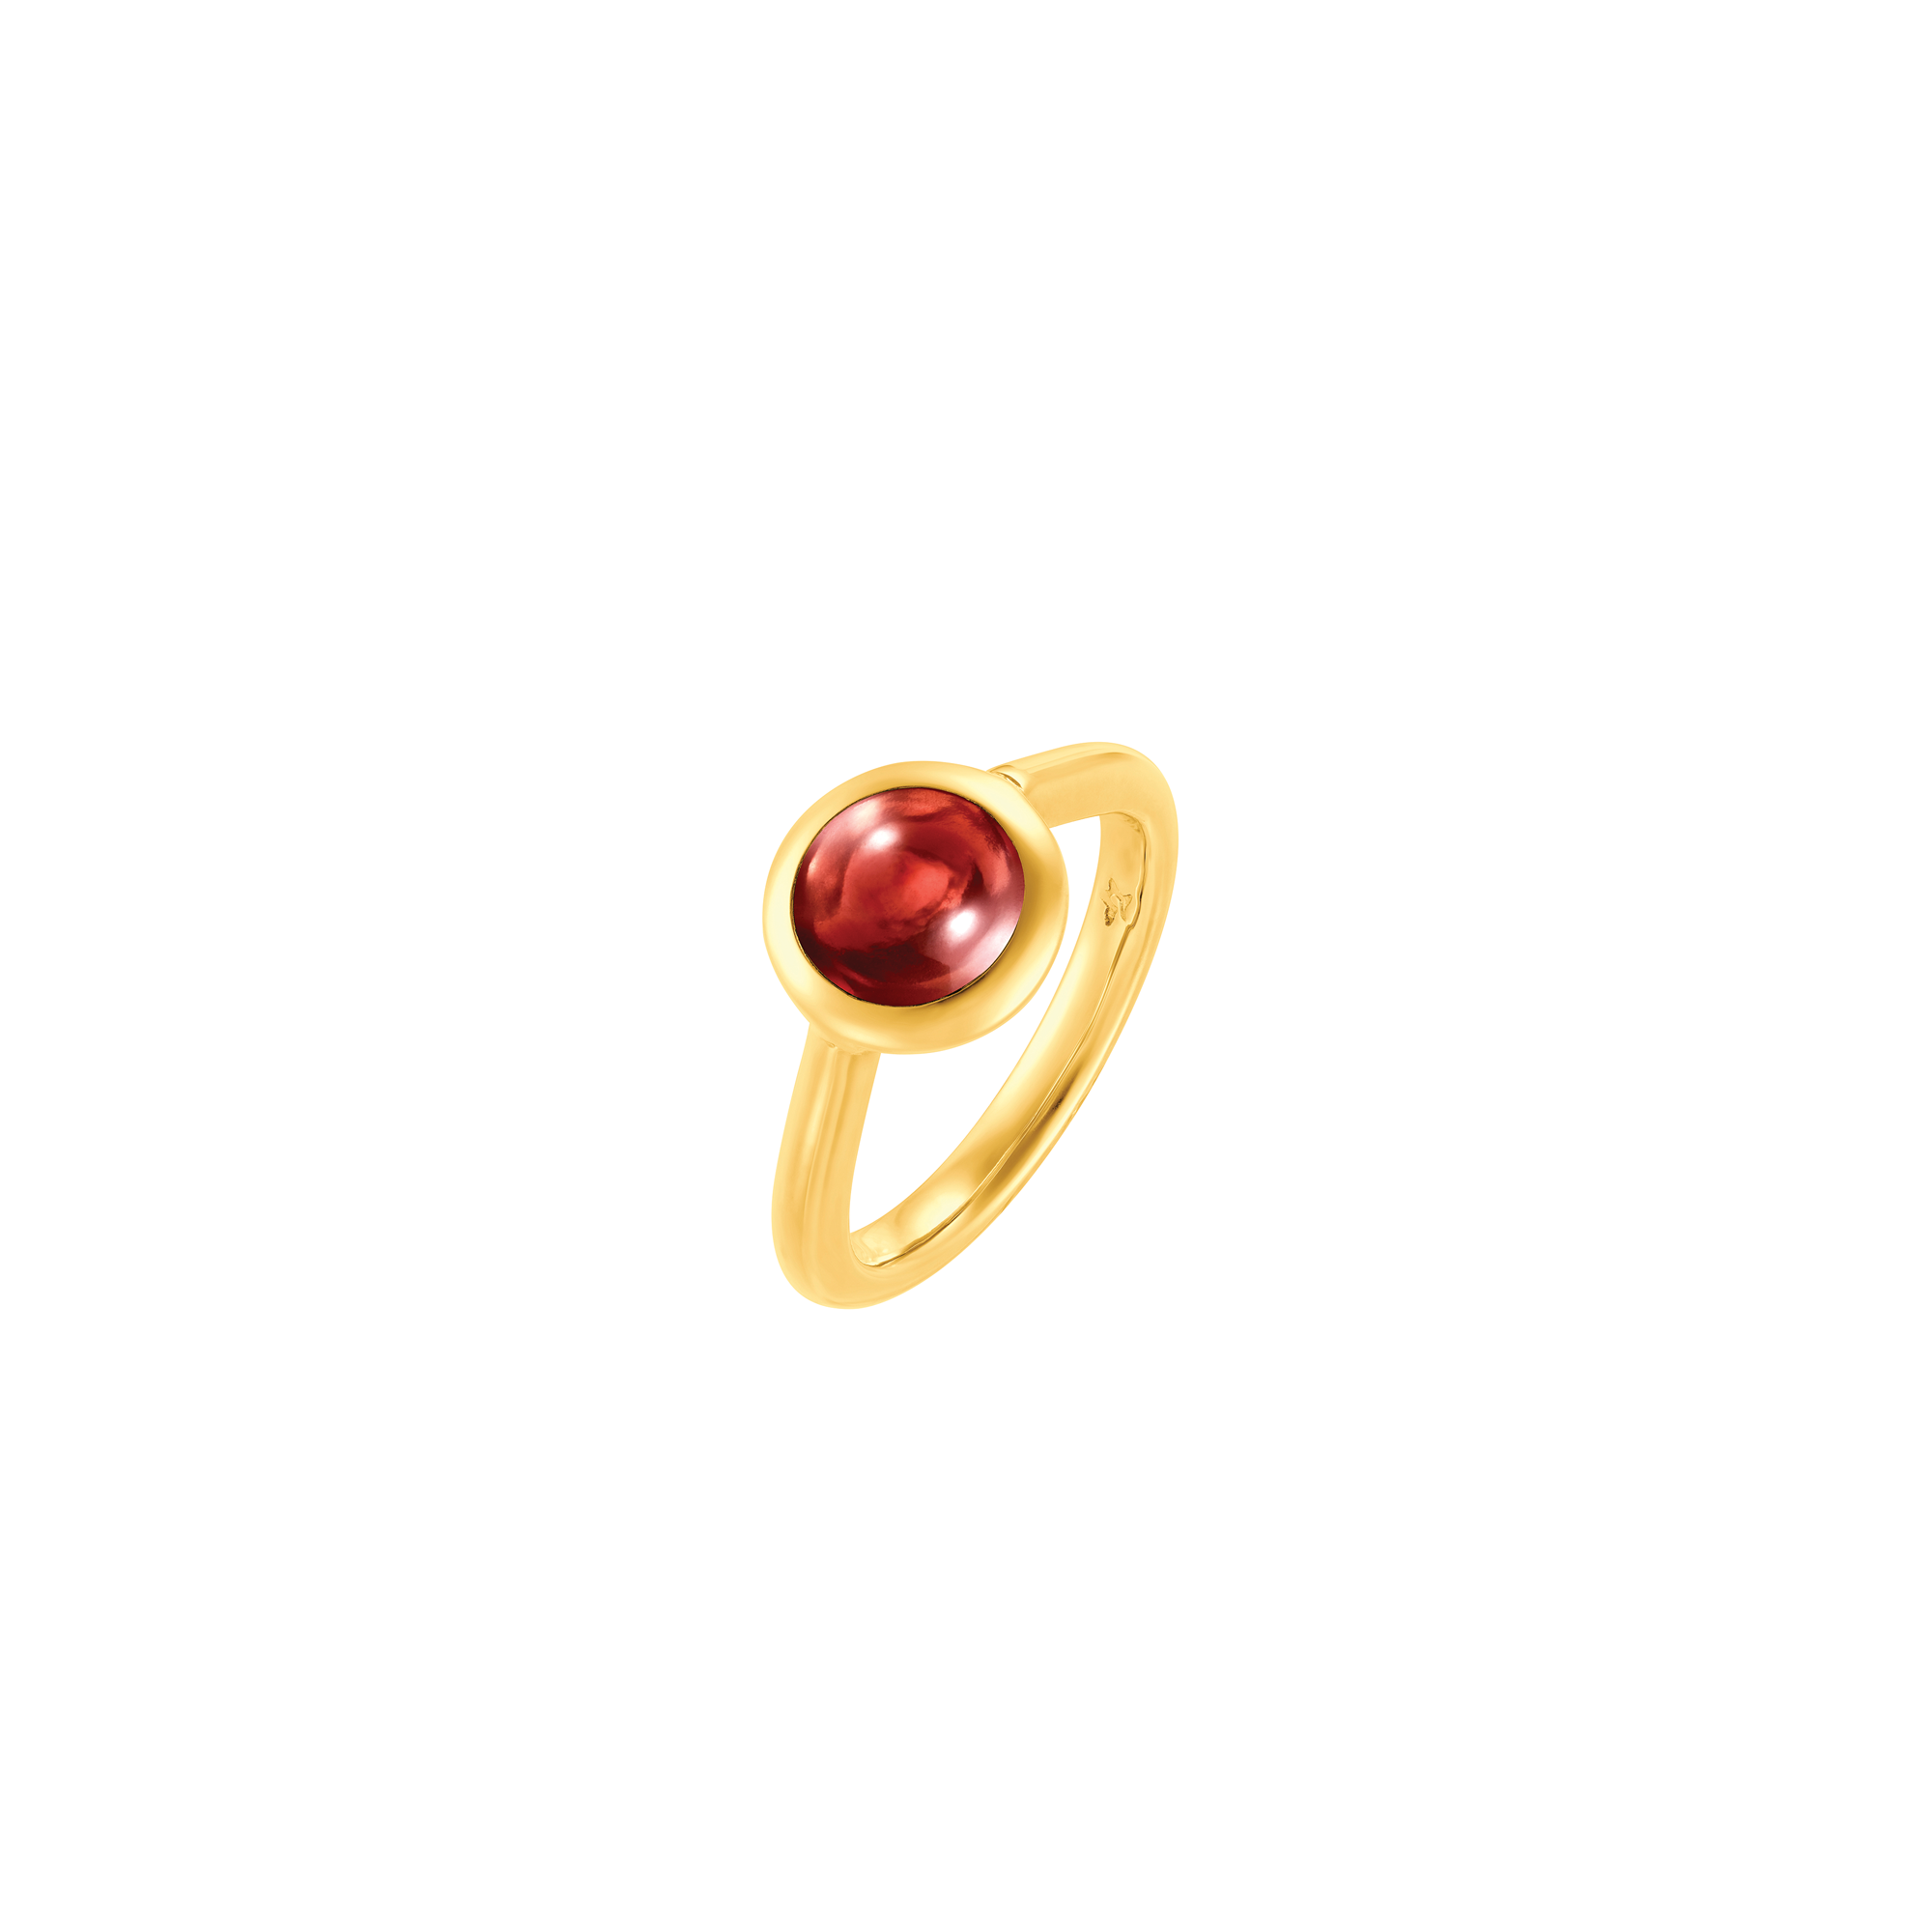 Peranakan Jewel Ring with Red Garnet